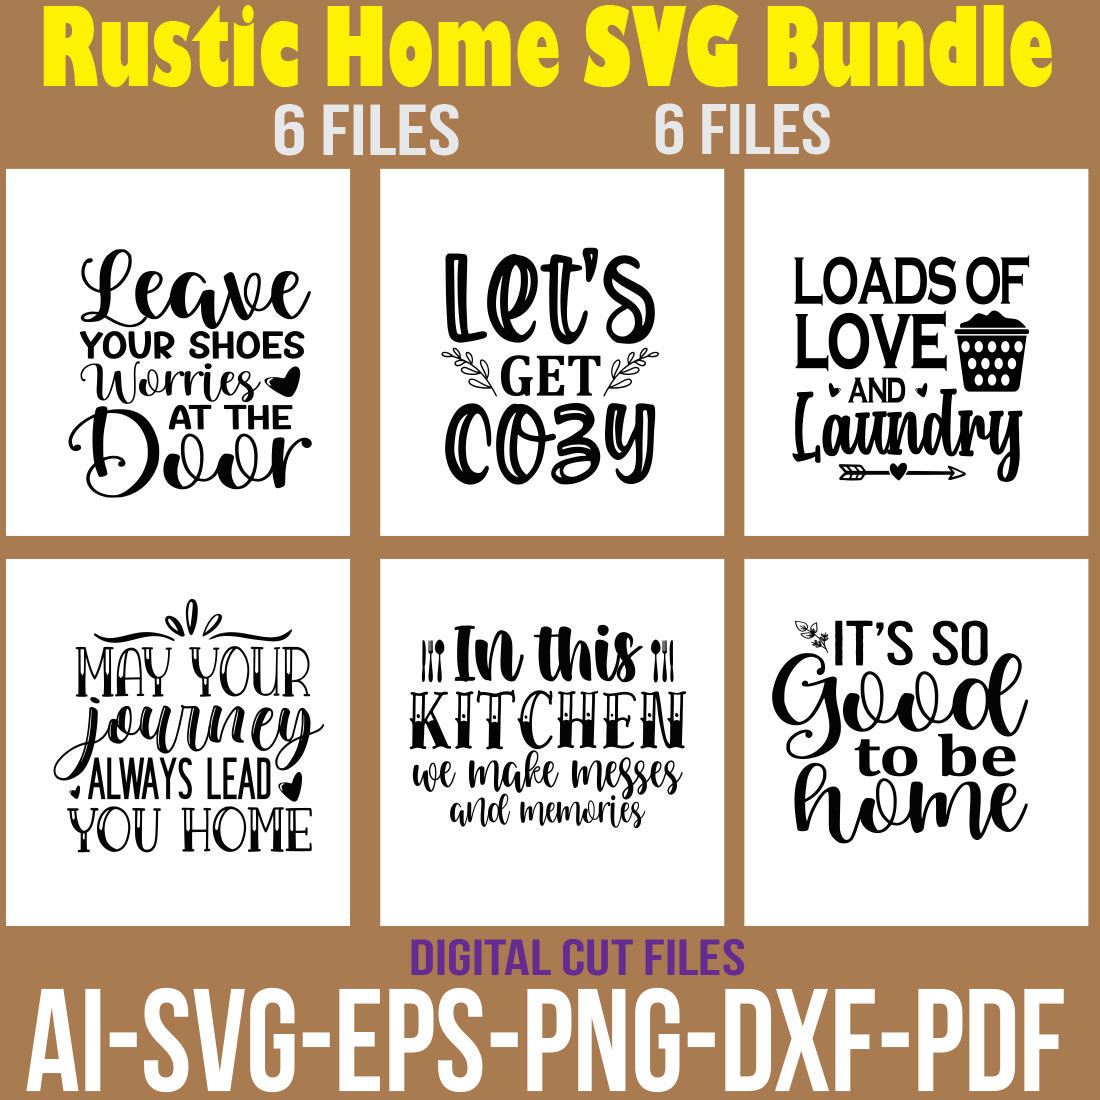 Rustic Home SVG Bundle cover image.